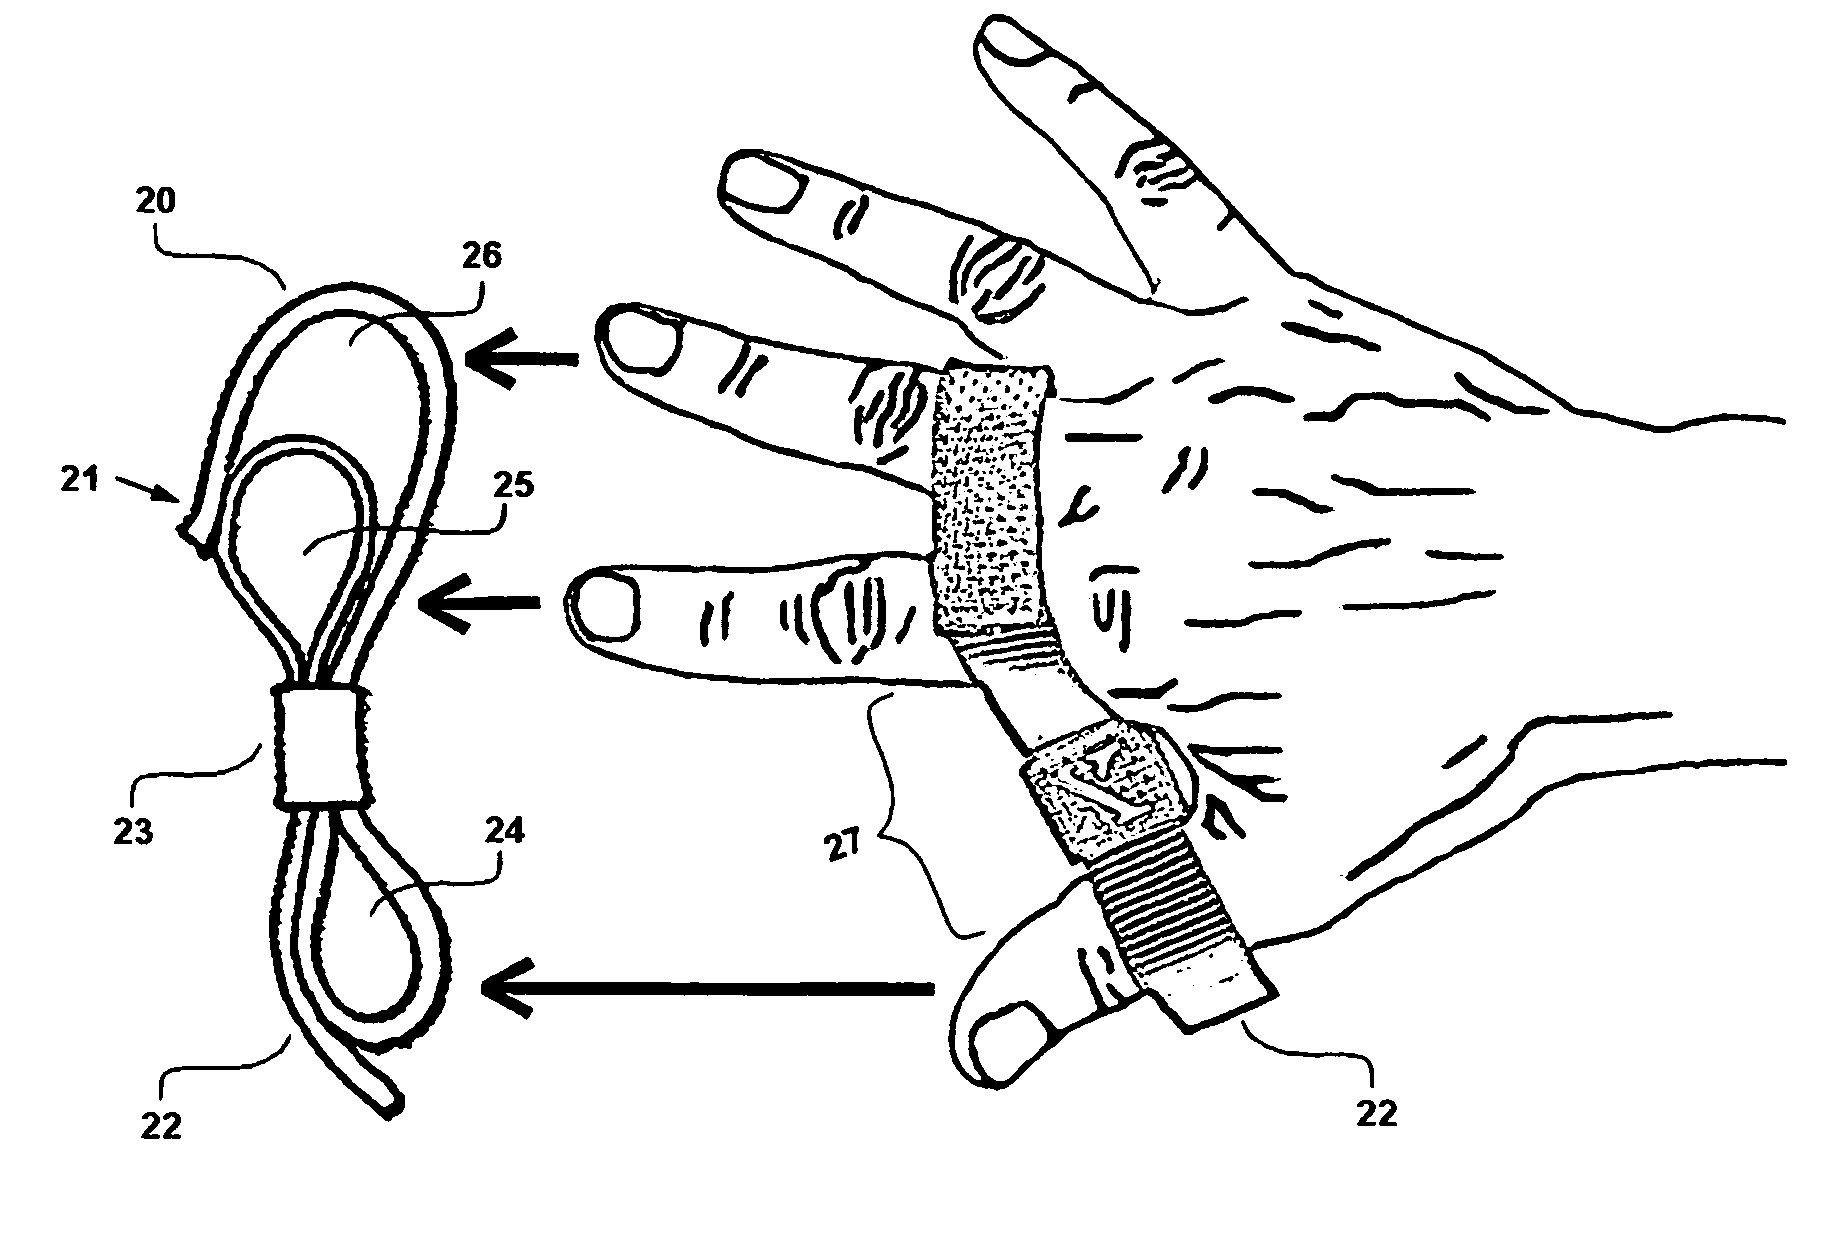 Strape glove